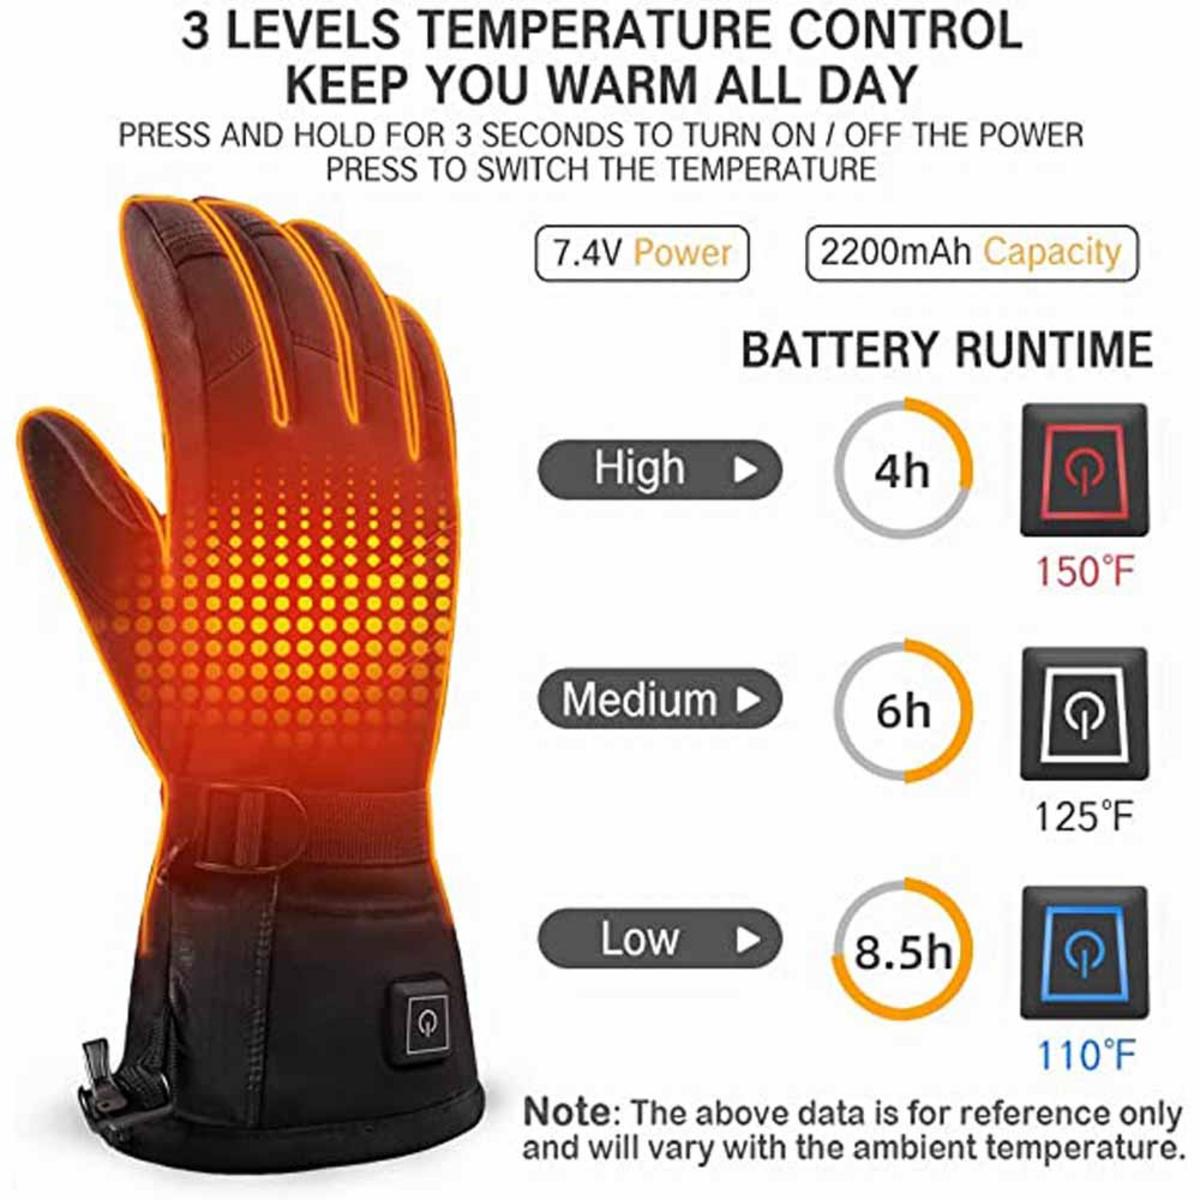 Mount Tec Explorer 3 Heated Performance Winter Gloves